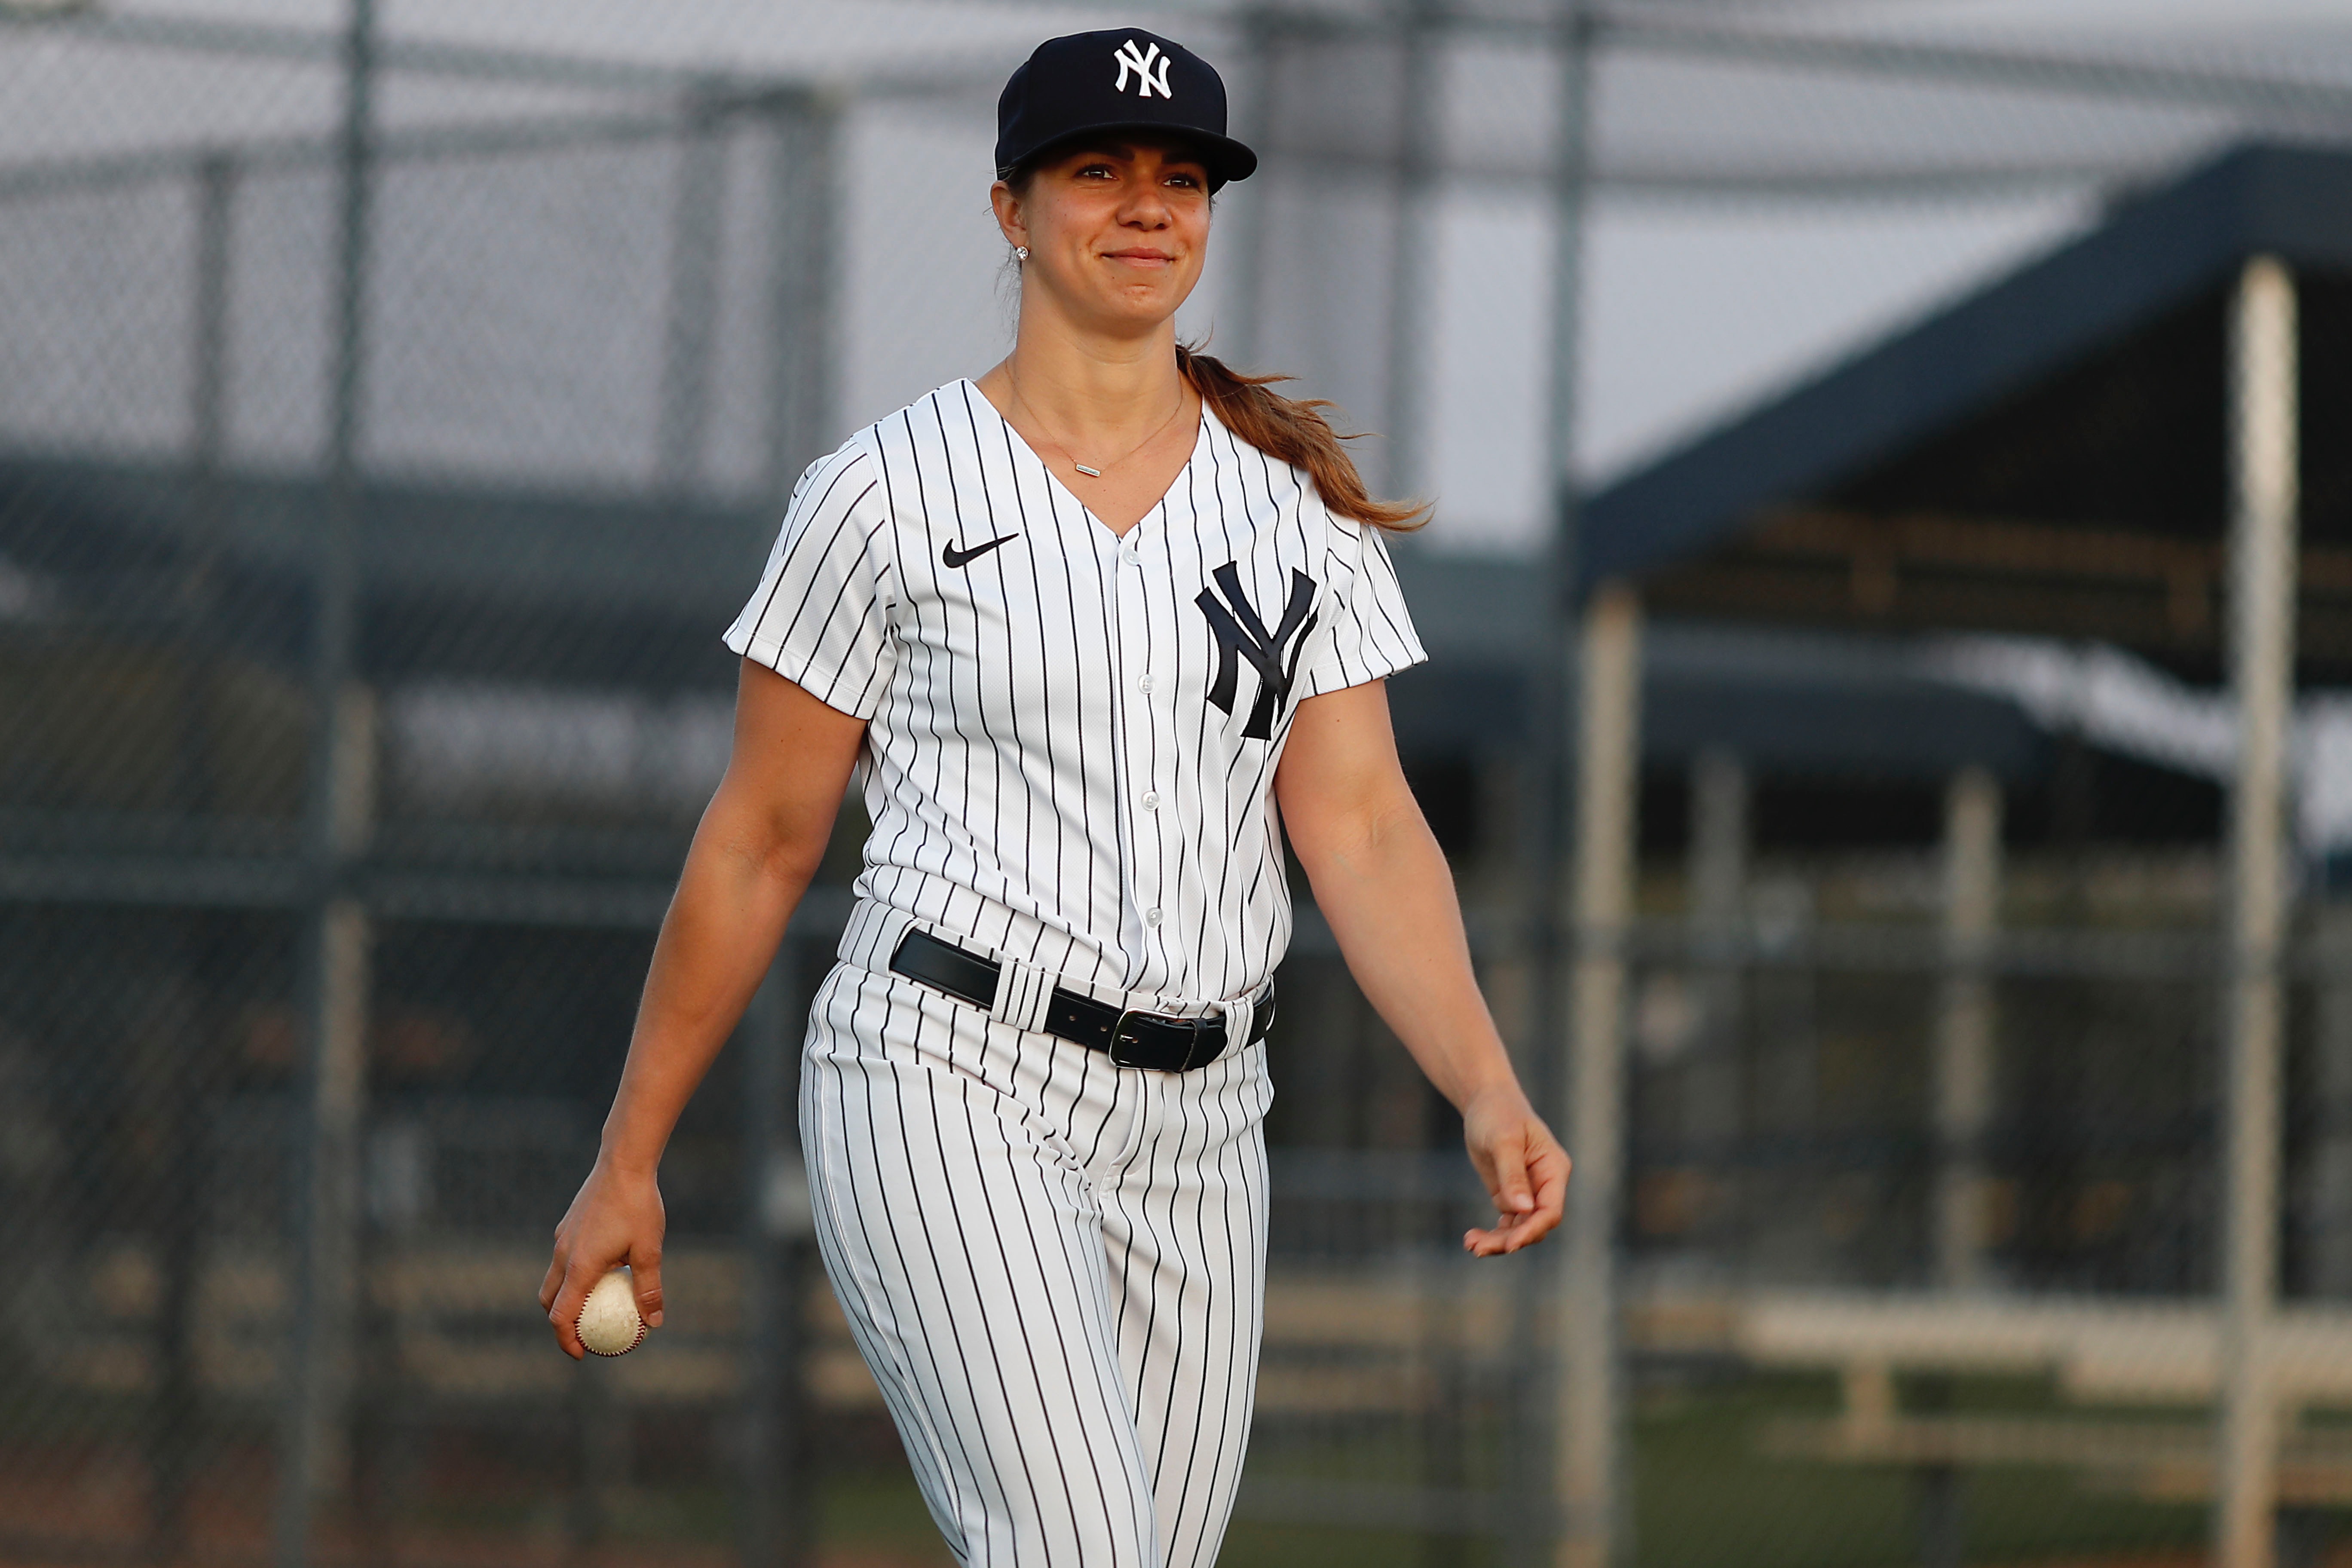 LSU grad Rachel Balkovec wears a Yankees uniform